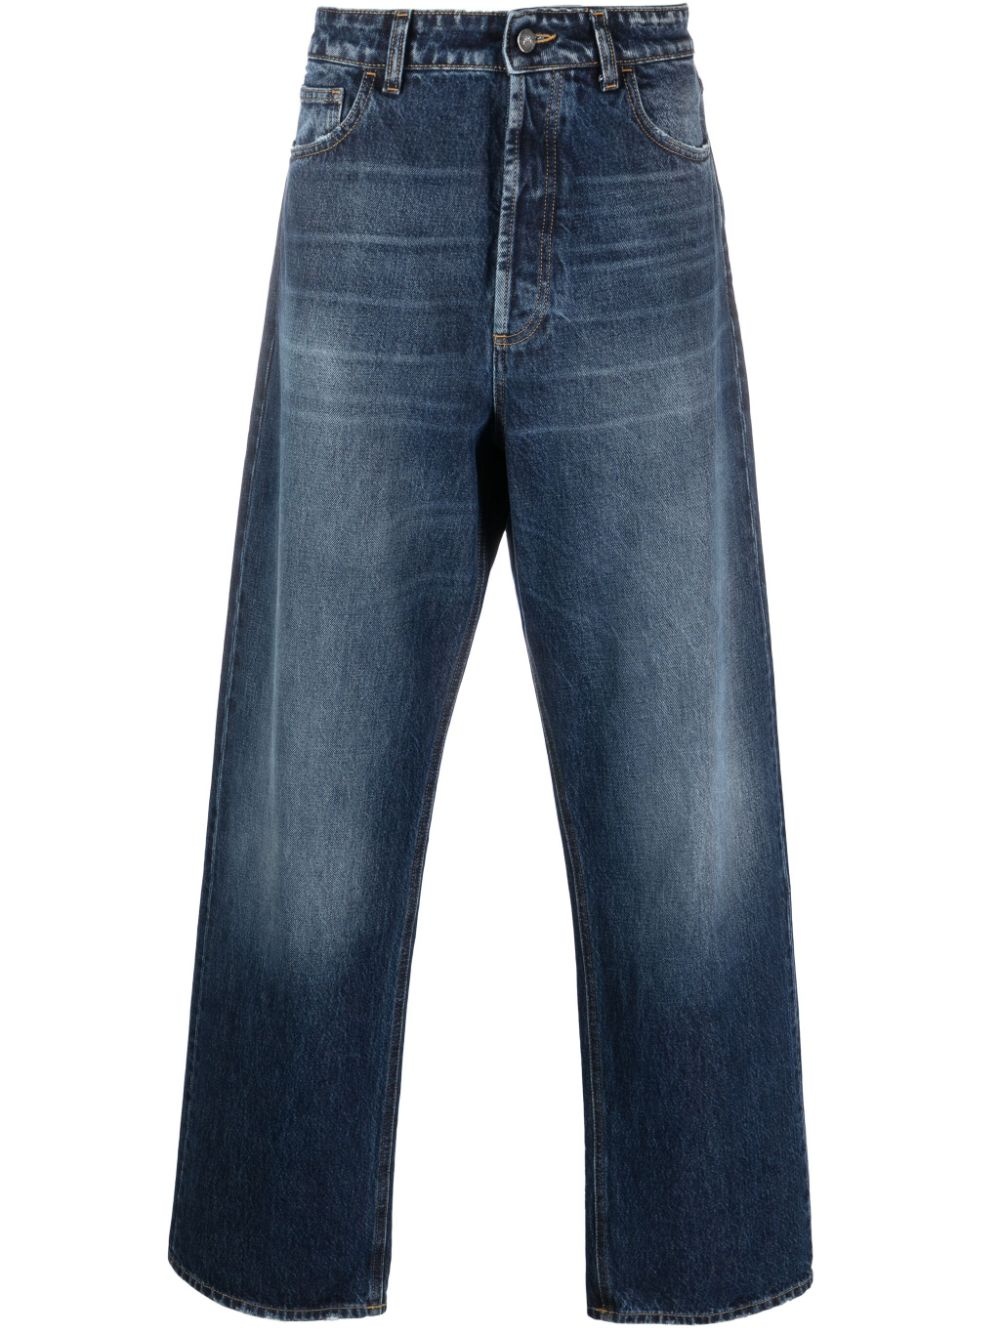 vintage-wash wide-leg jeans - 1